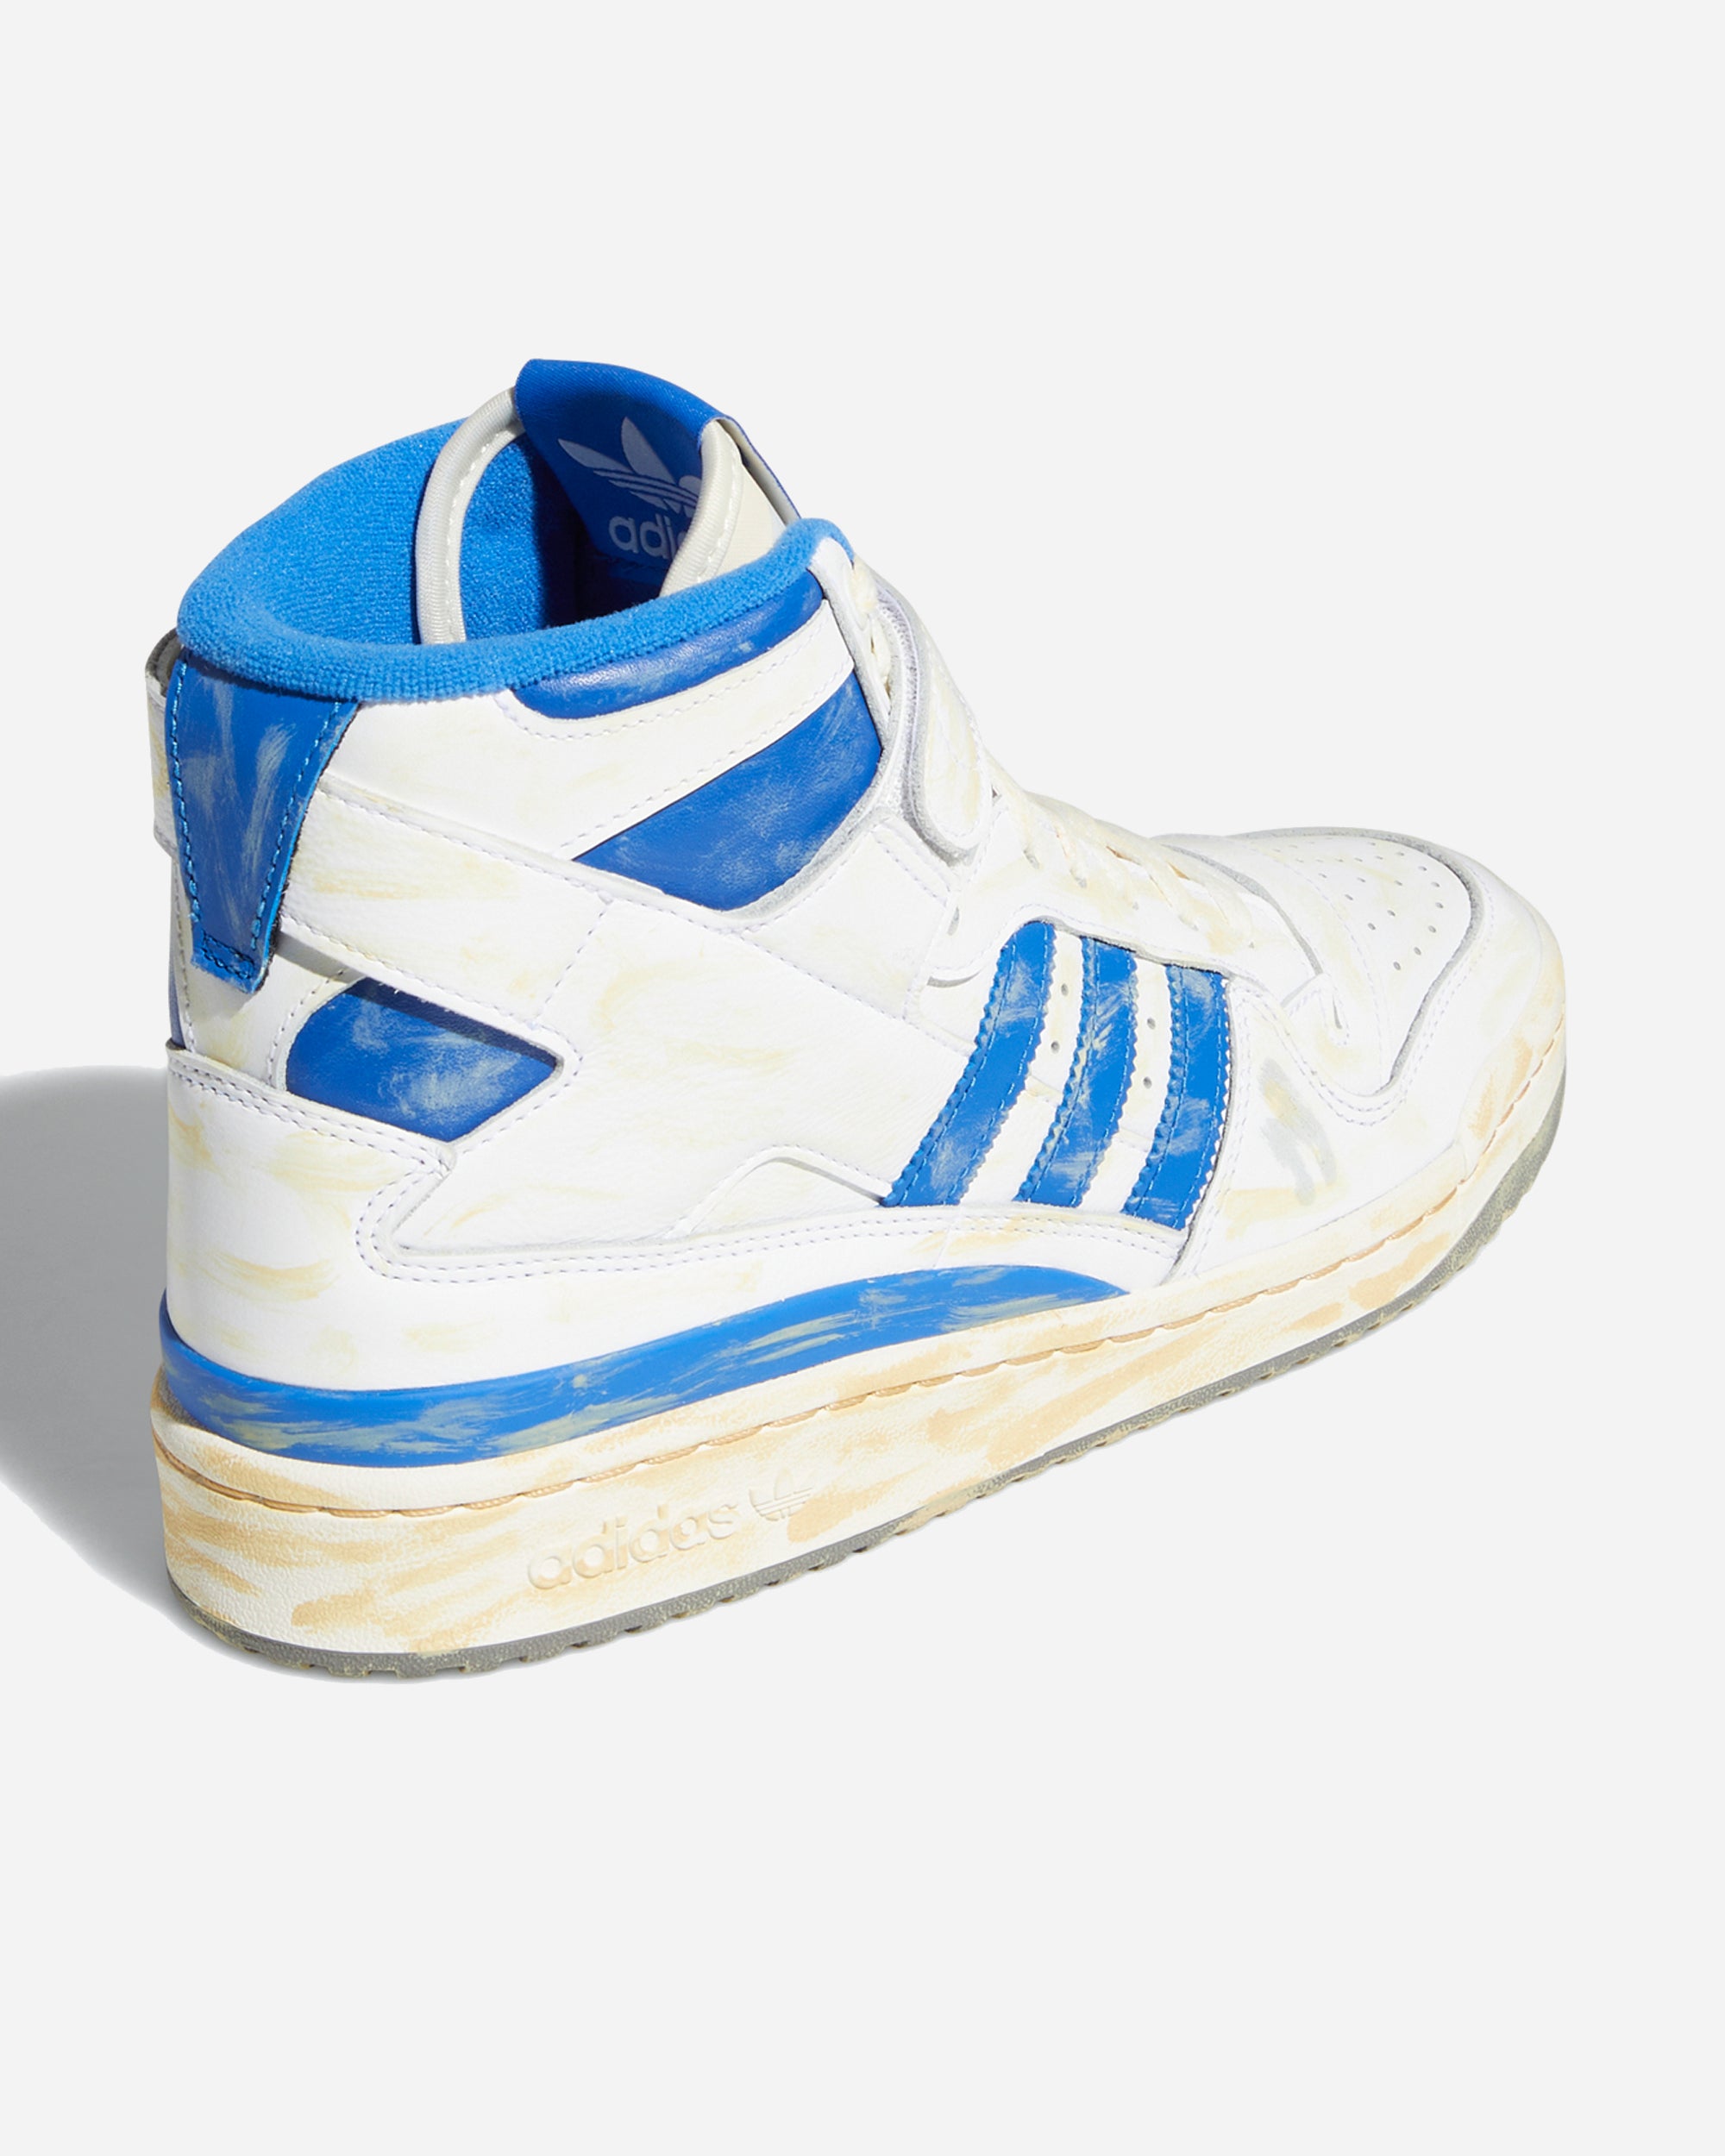 Adidas Ori Forum 84 High Vintage Footwear White/Blue GZ6467